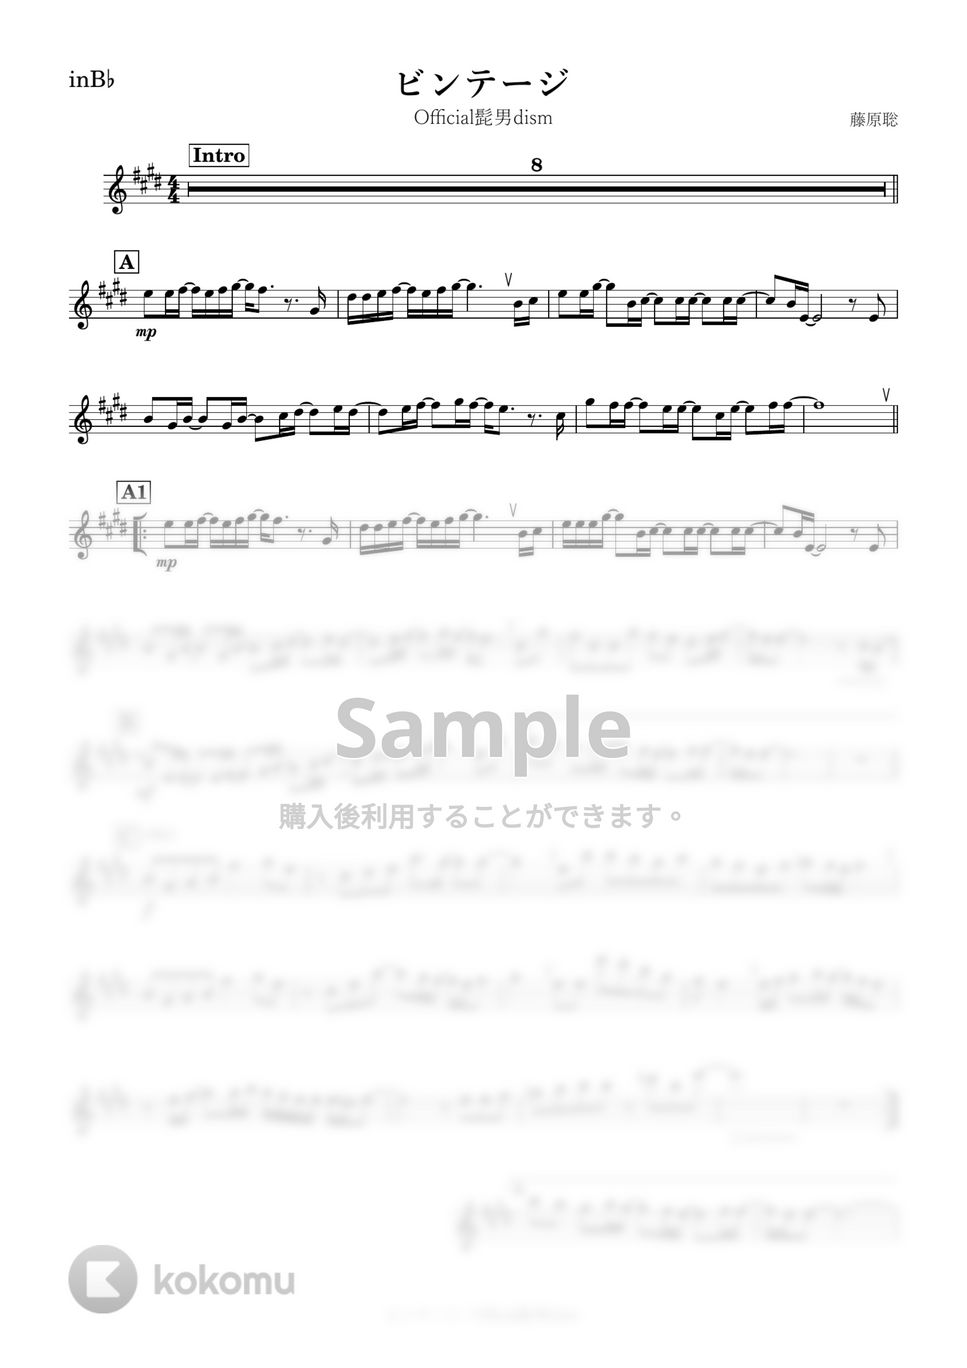 Official髭男dism - ビンテージ (B♭) by kanamusic